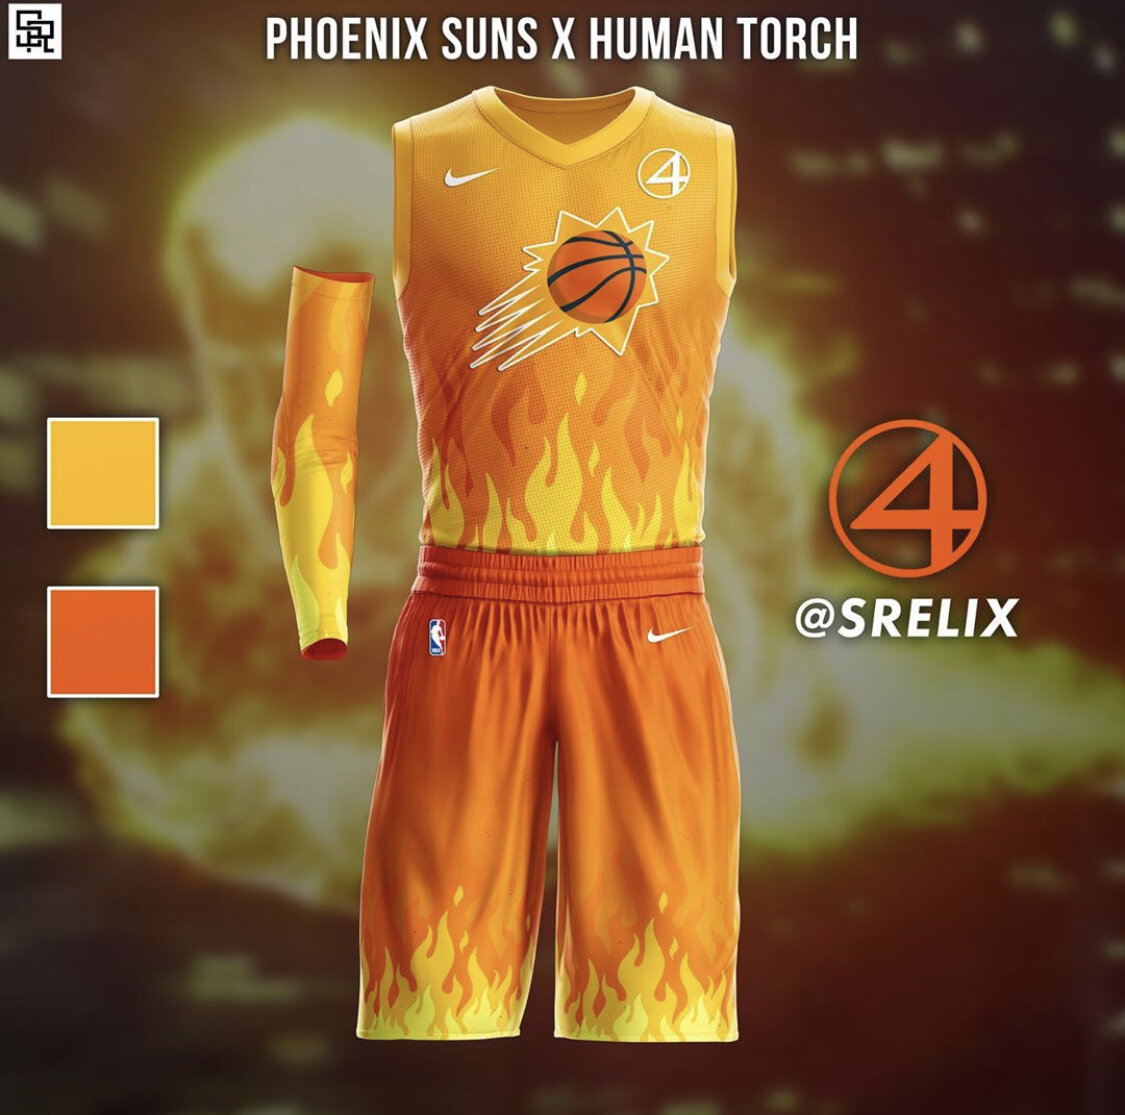 theScore - NBA x superhero jerseys. Who's got the best